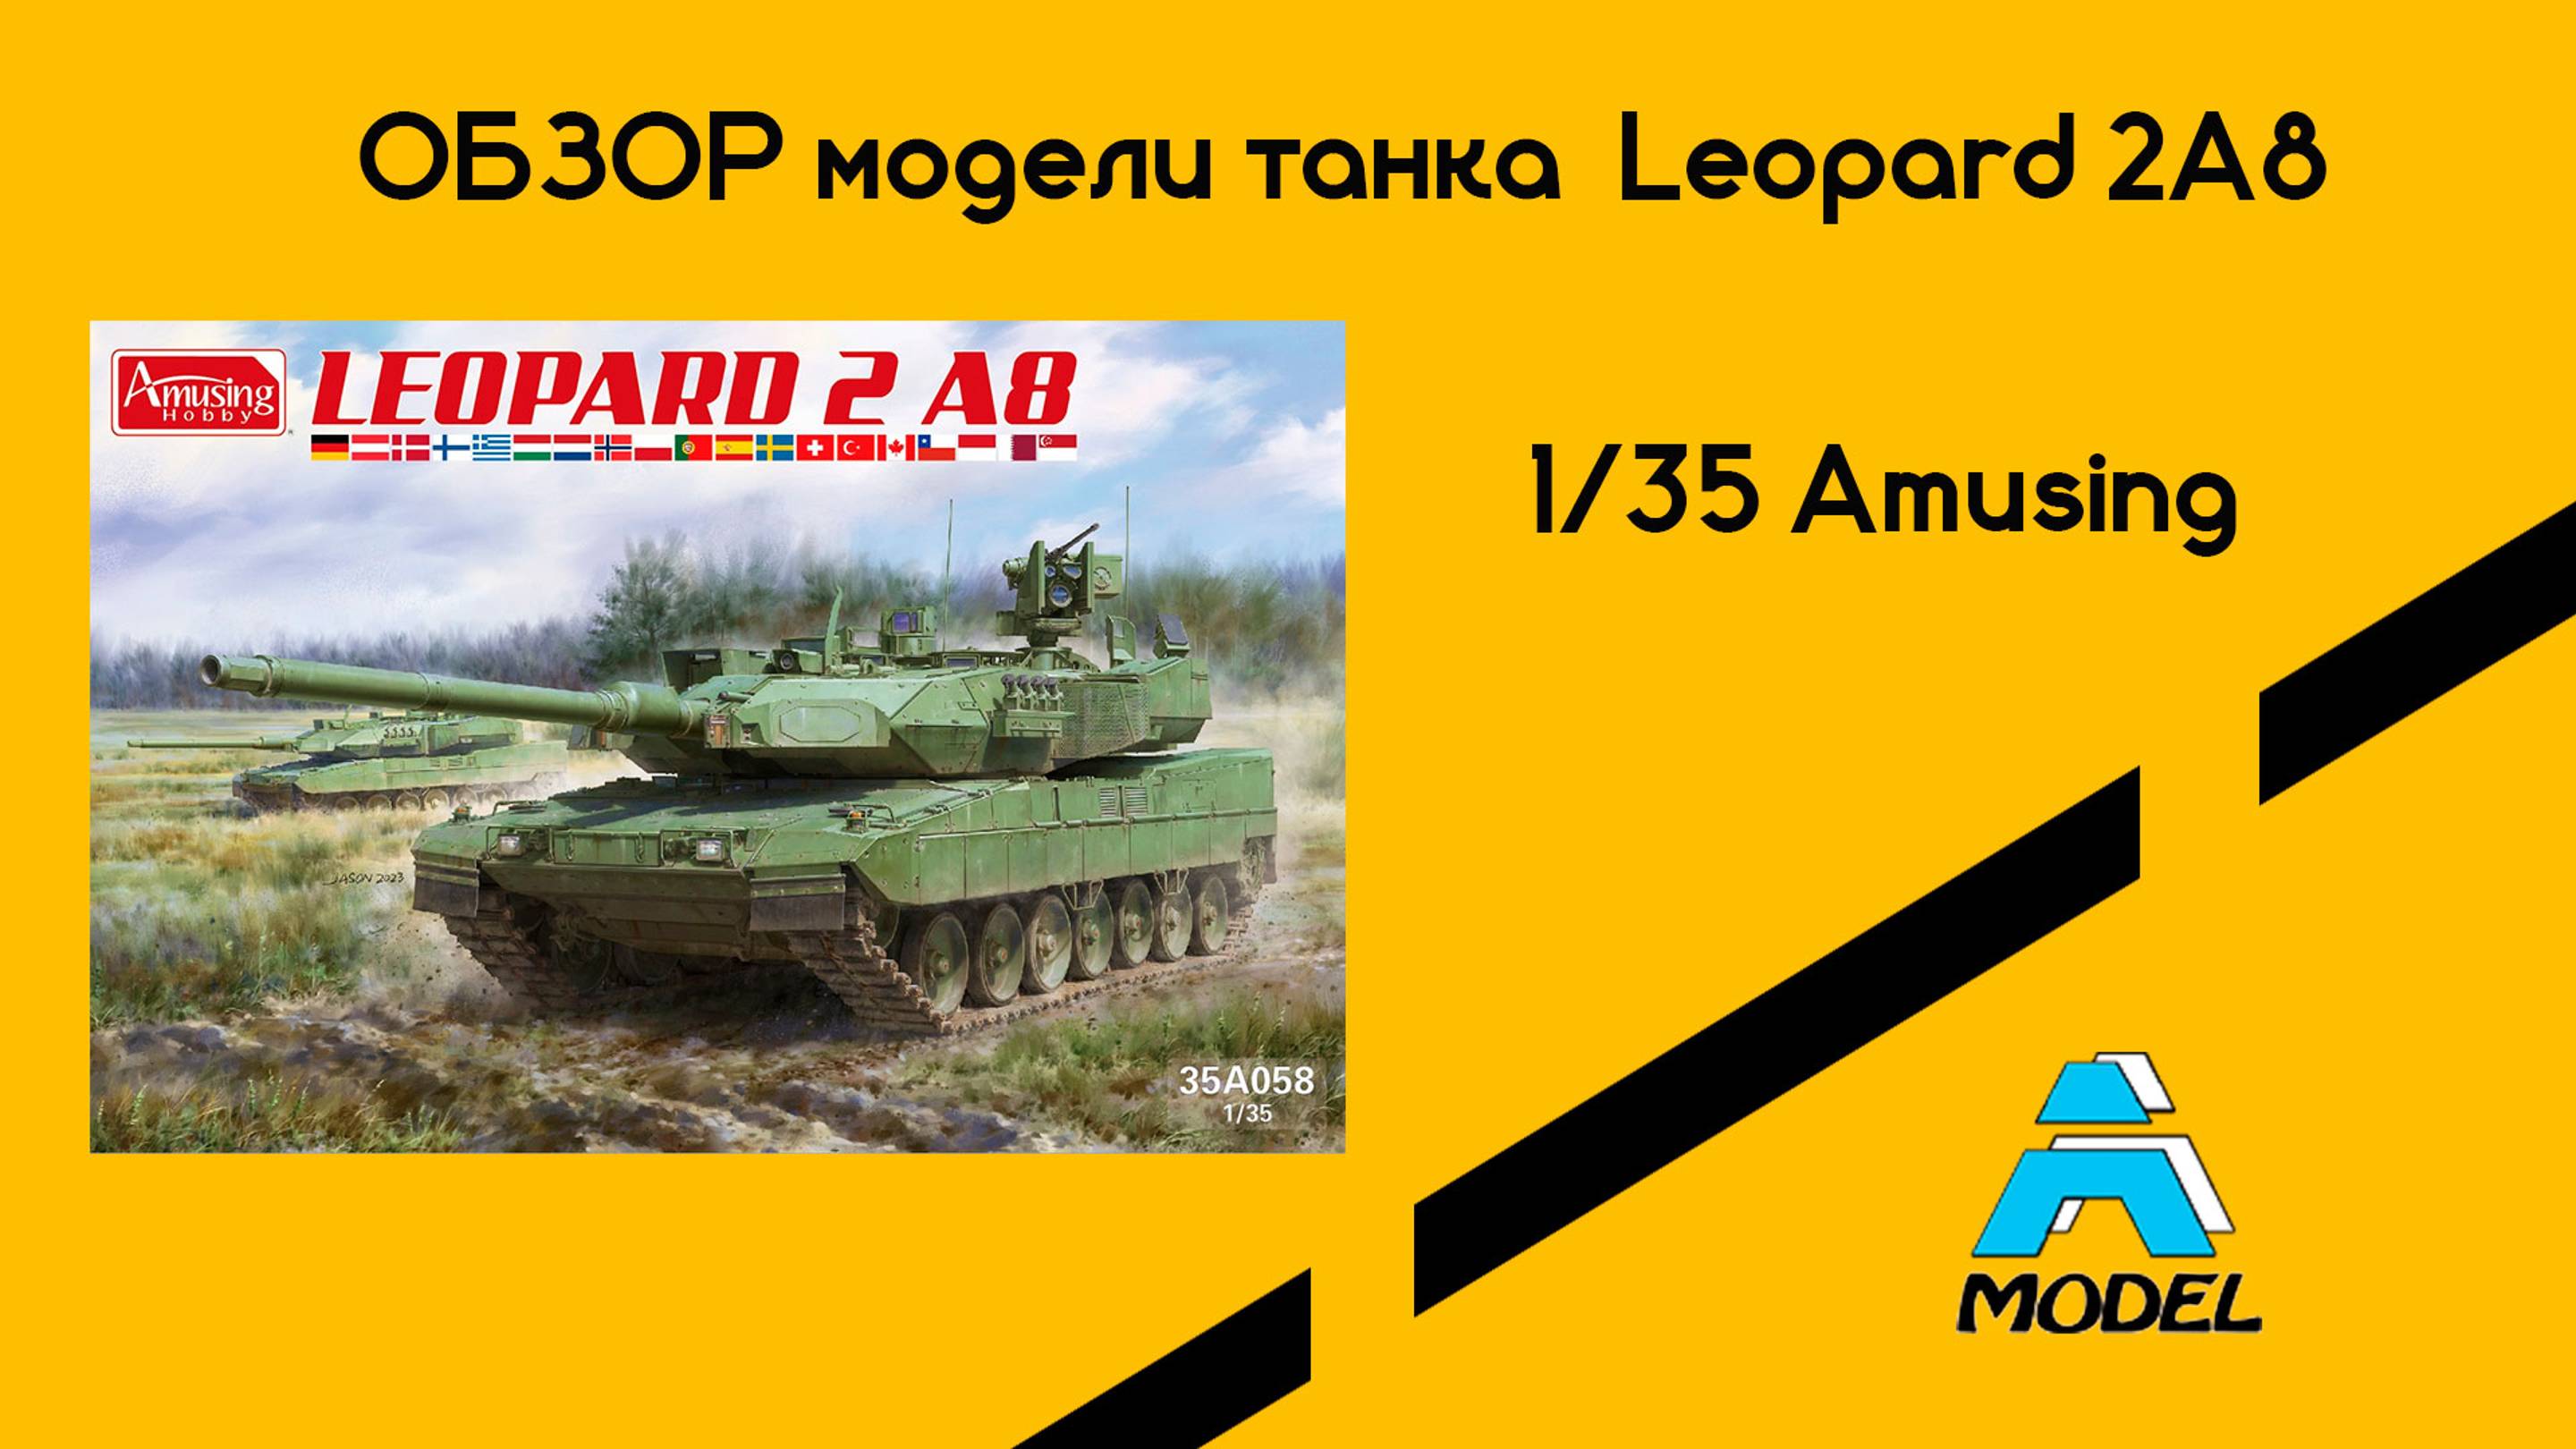 Leopard 2A8 модель 1/35 Amusing